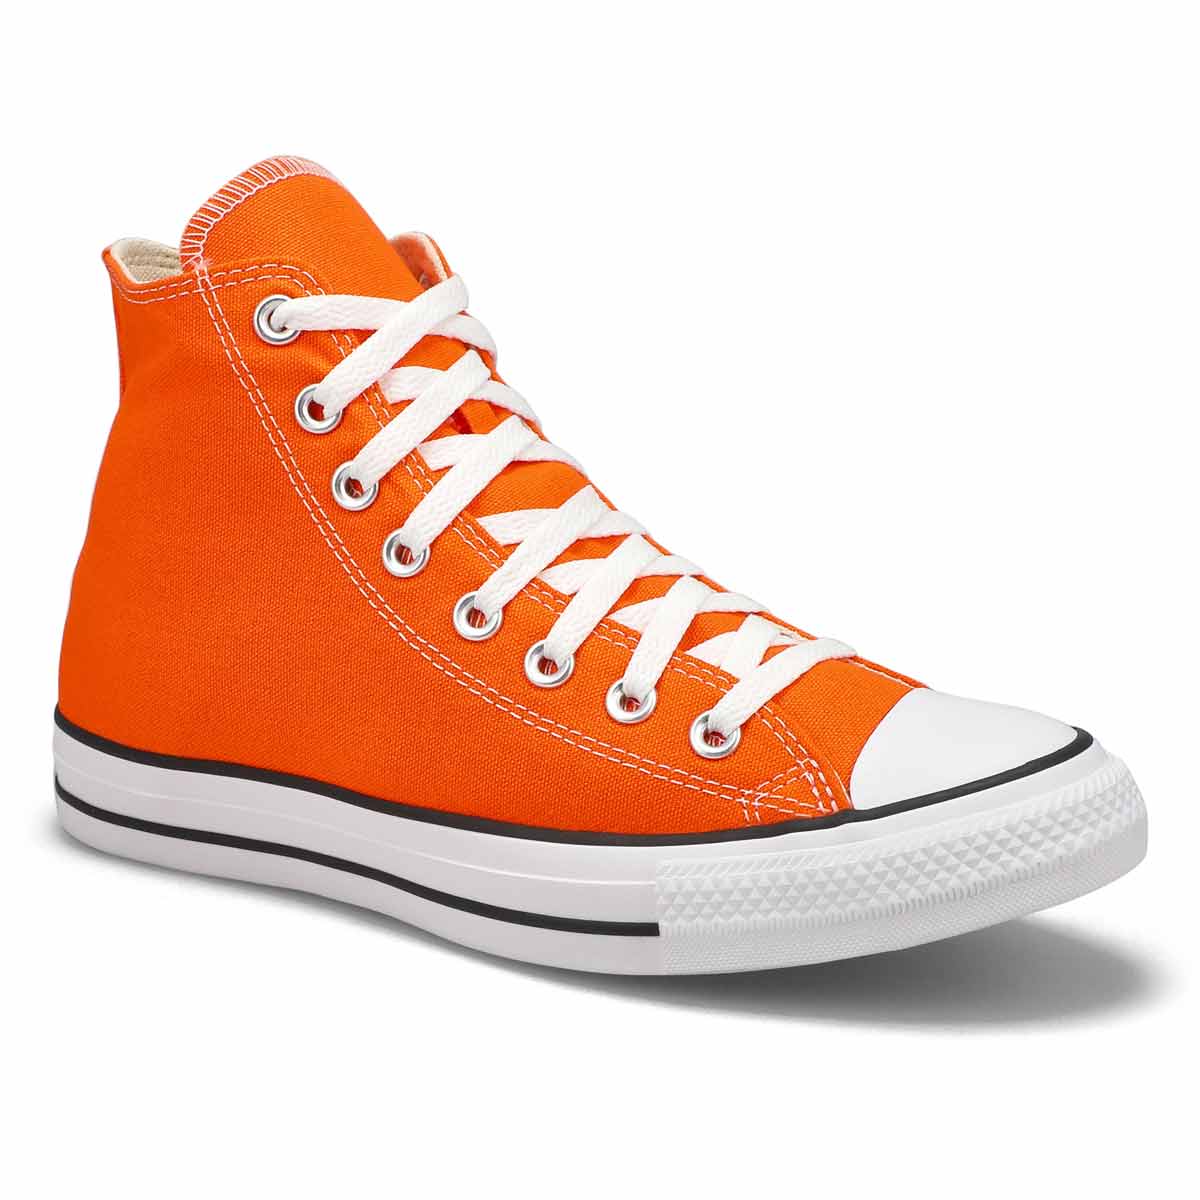 Converse Lds CTAS Hi Sneaker - Orange | SoftMoc USA